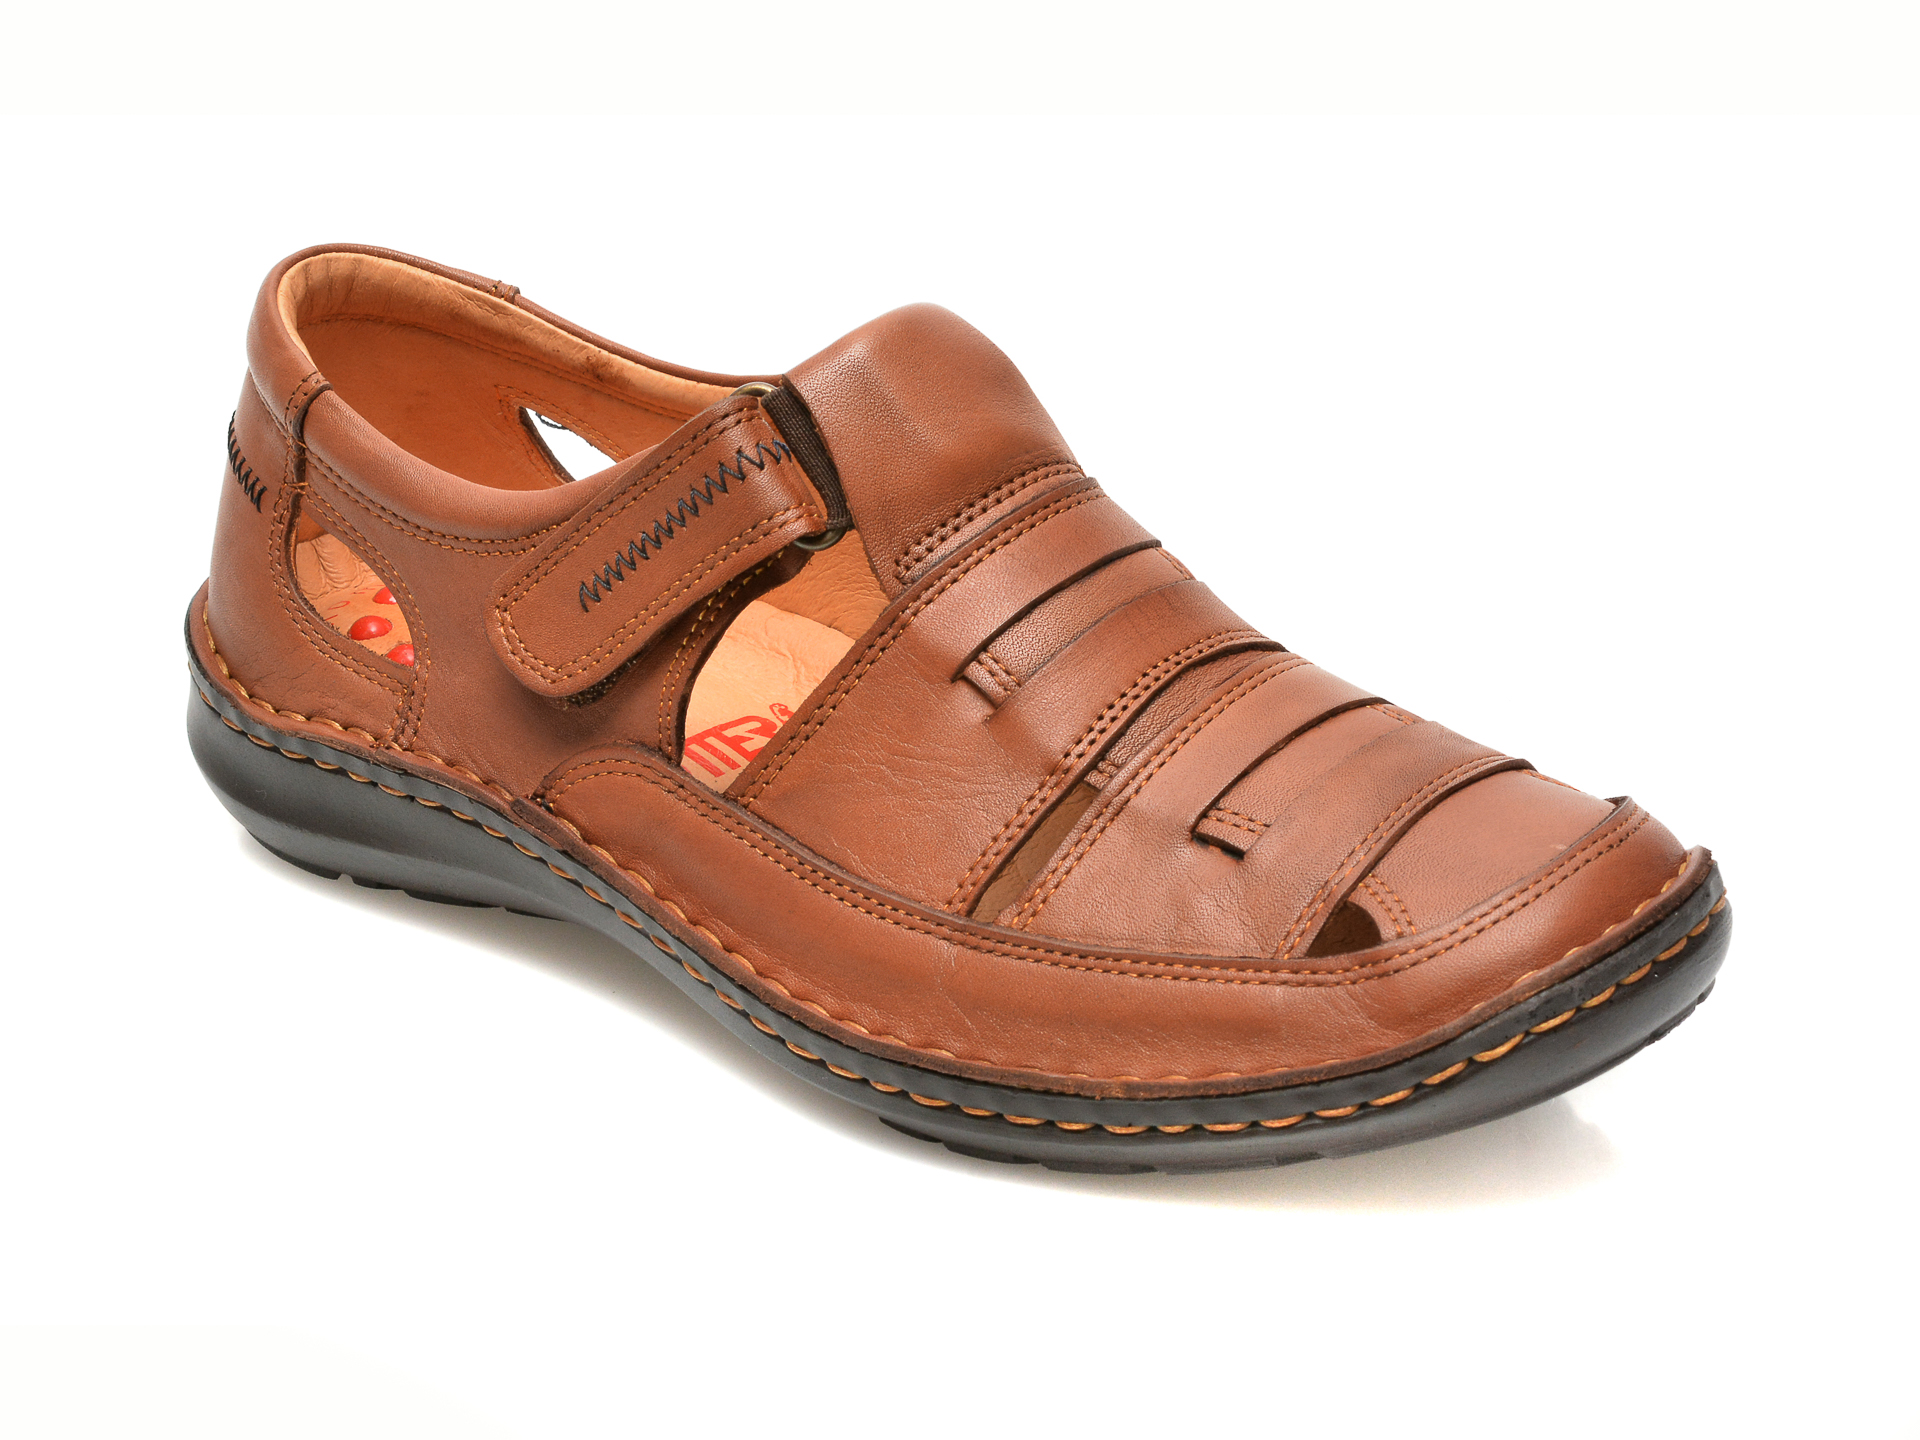 Sandale OTTER maro, 9562, din piele naturala /barbati/sandale